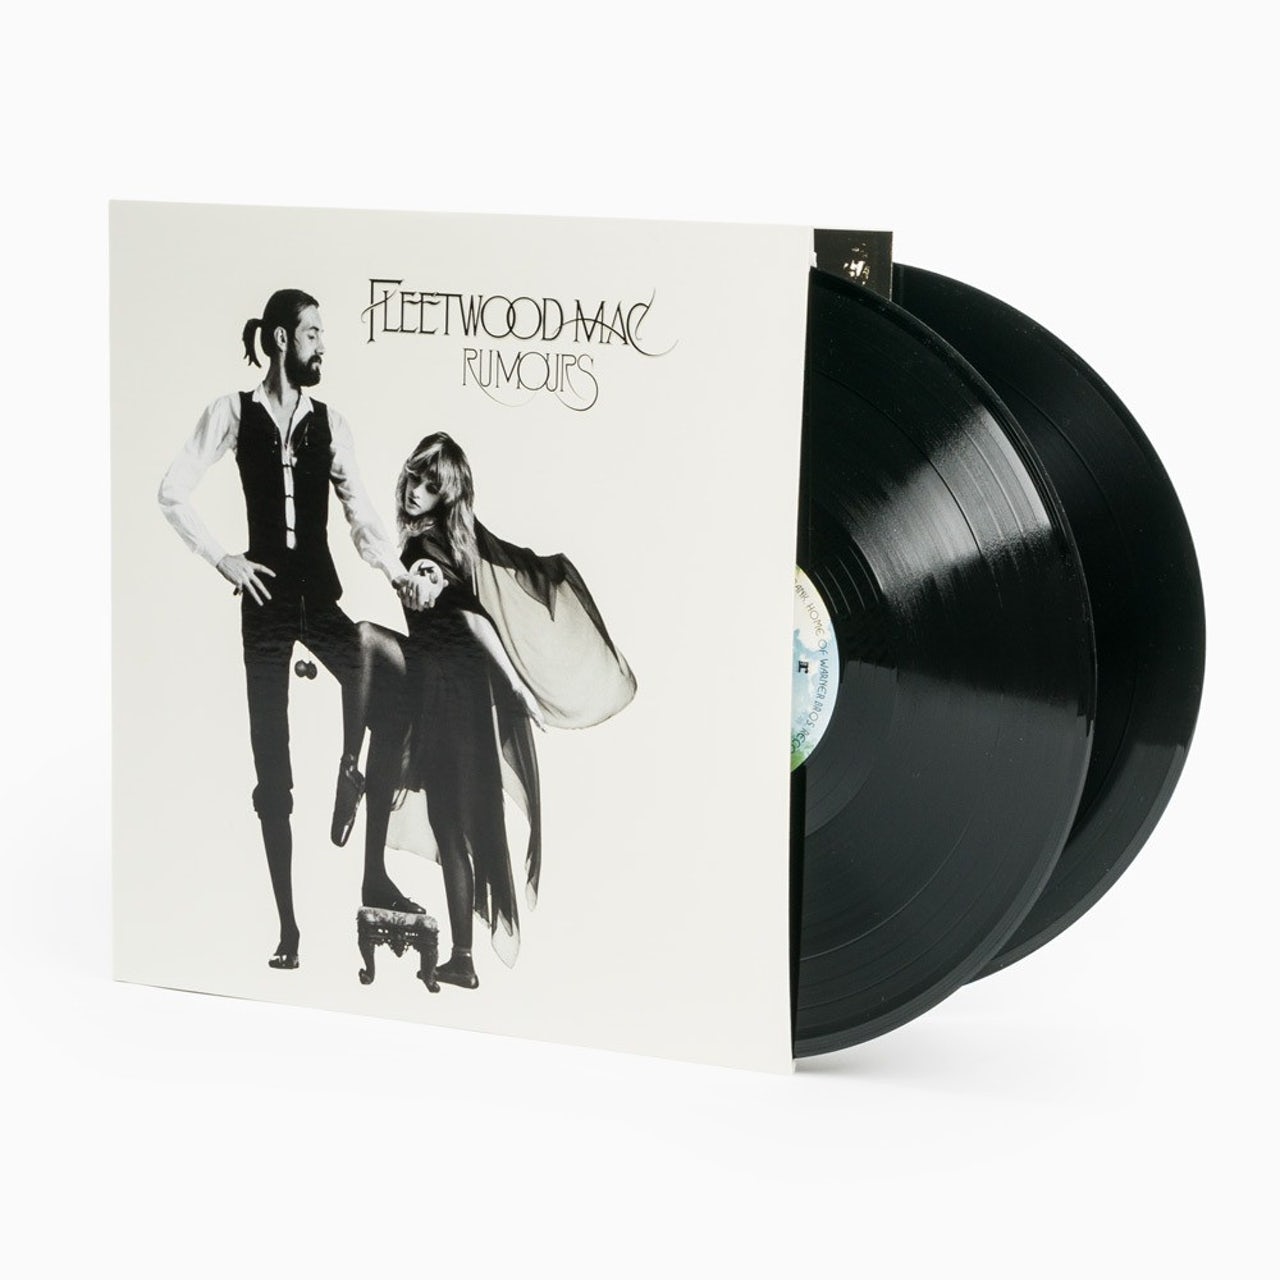 Fleetwood Mac - Rumores - 45 RPM LP